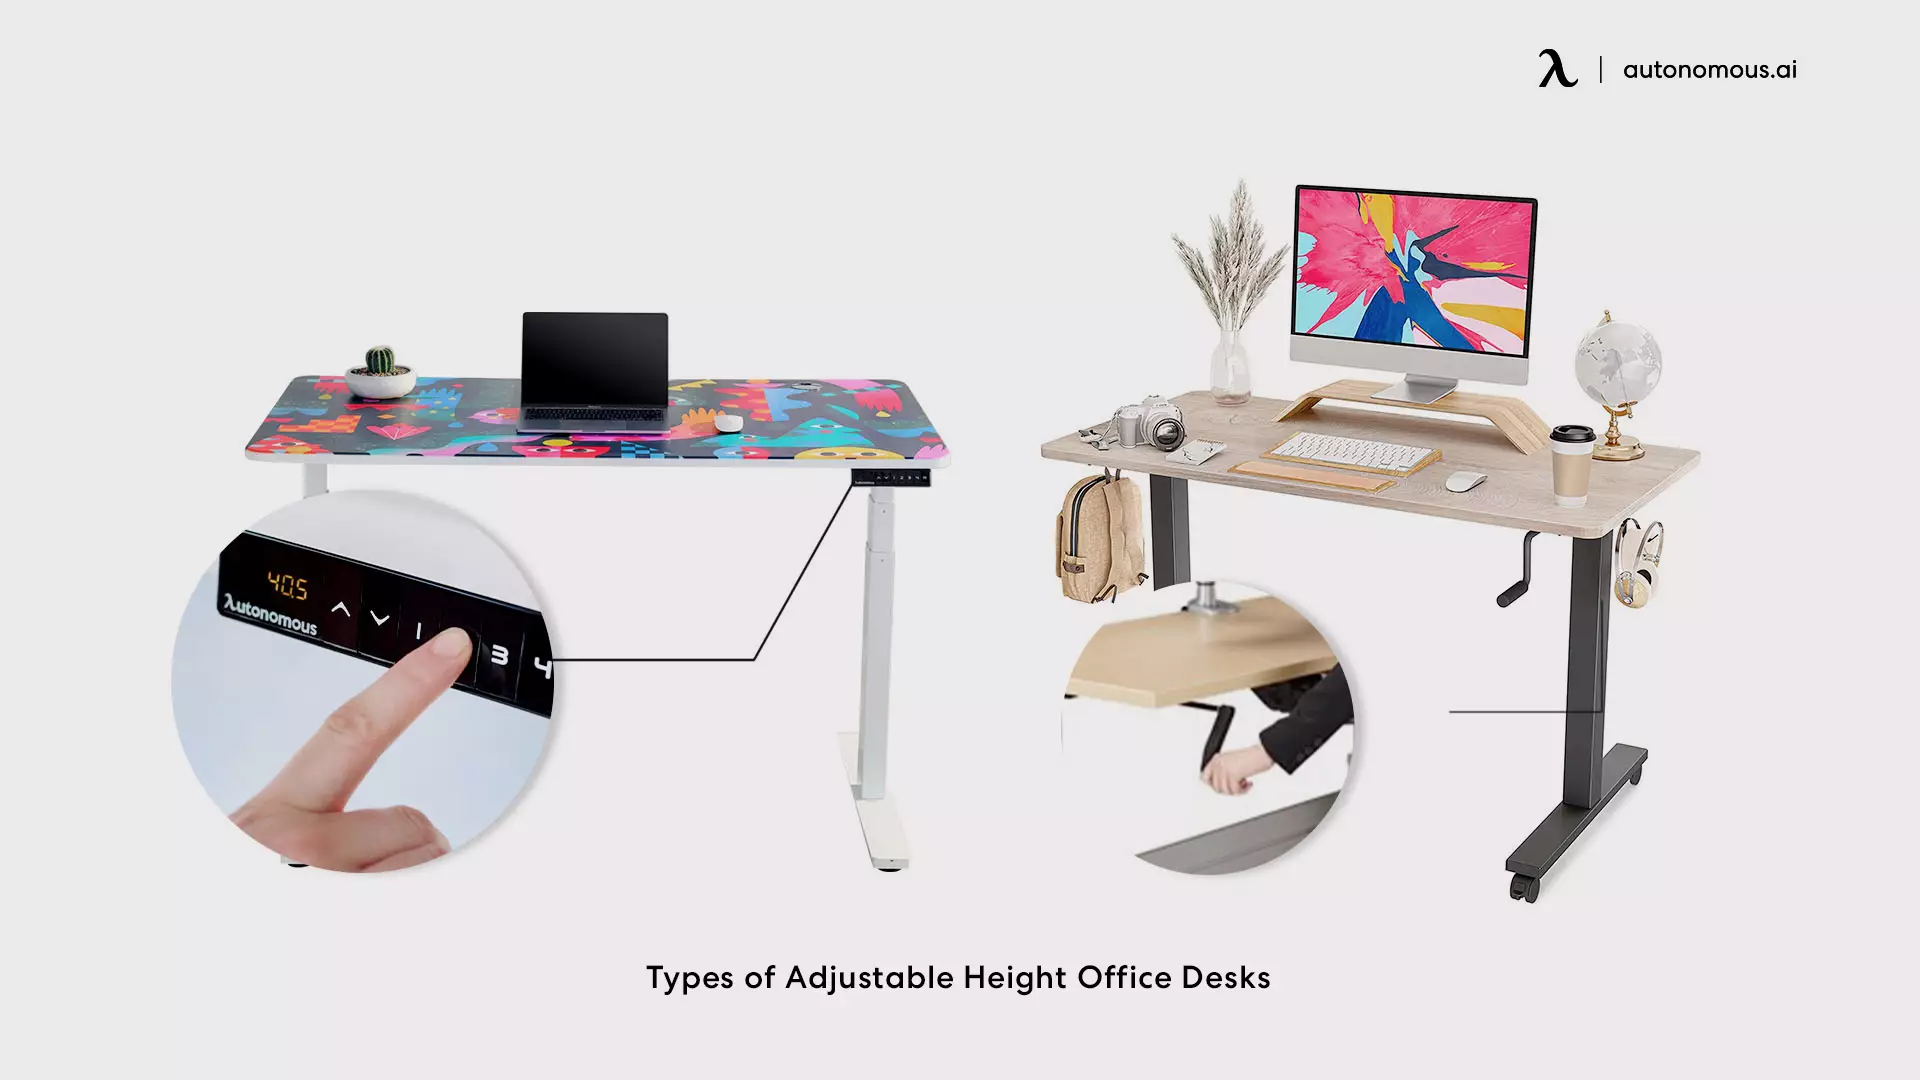 Types of Adjustable Height Office Desks